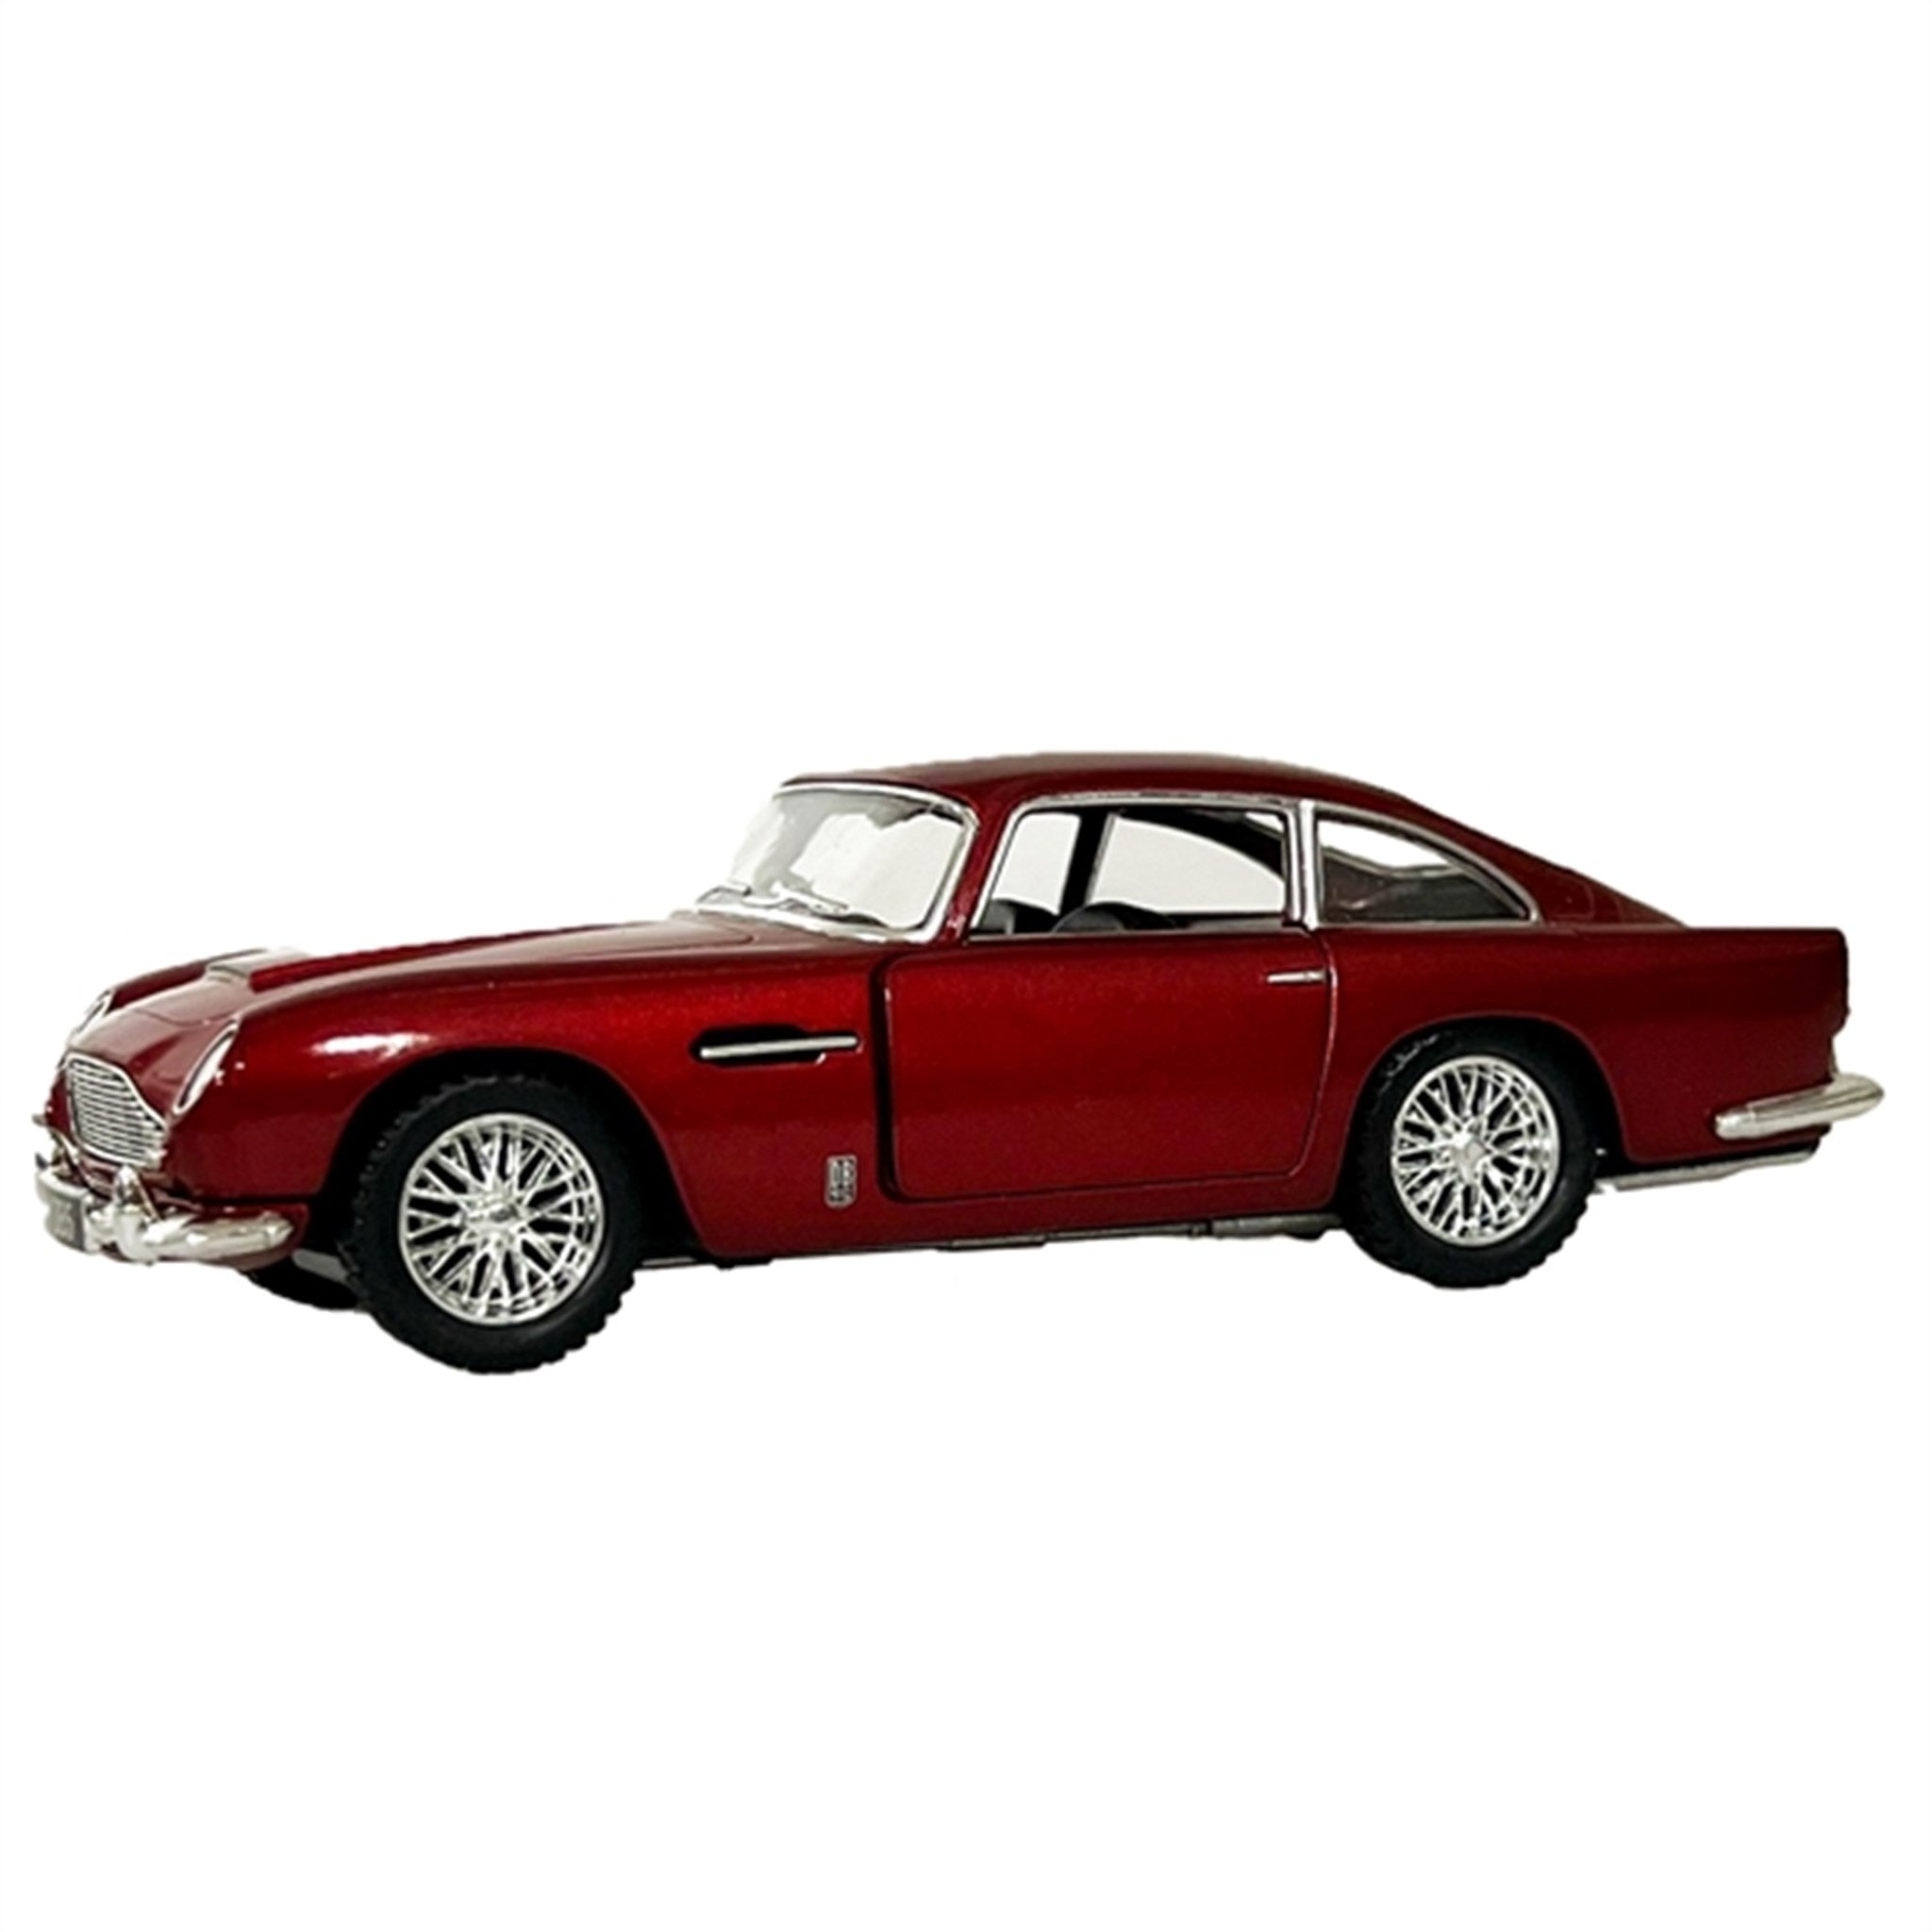 Magni Aston Martin - Rød